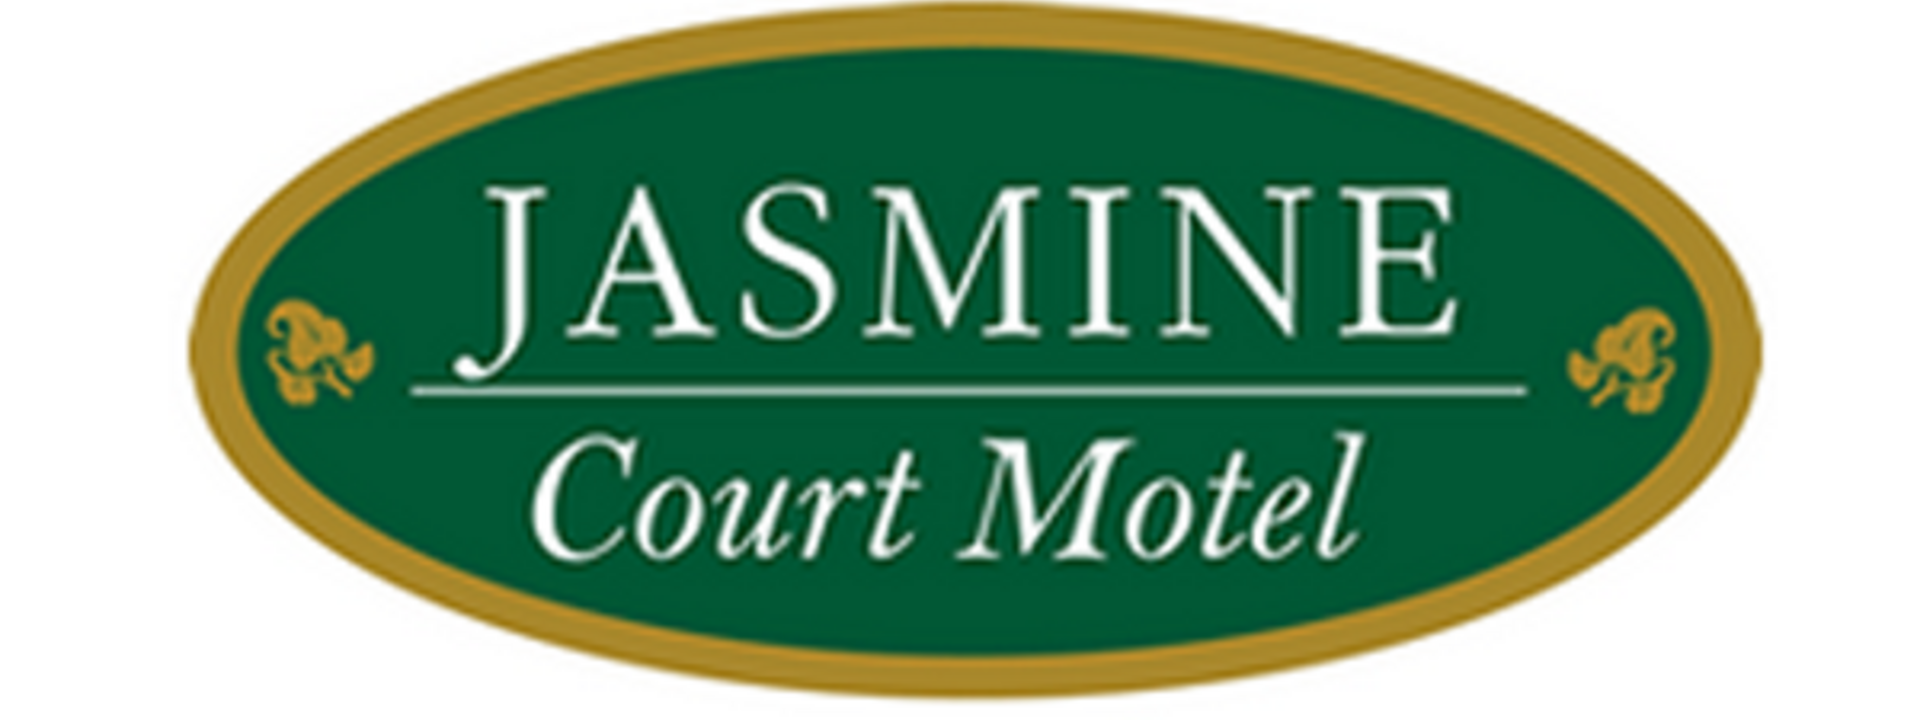 Jasmine Court Motel Logo